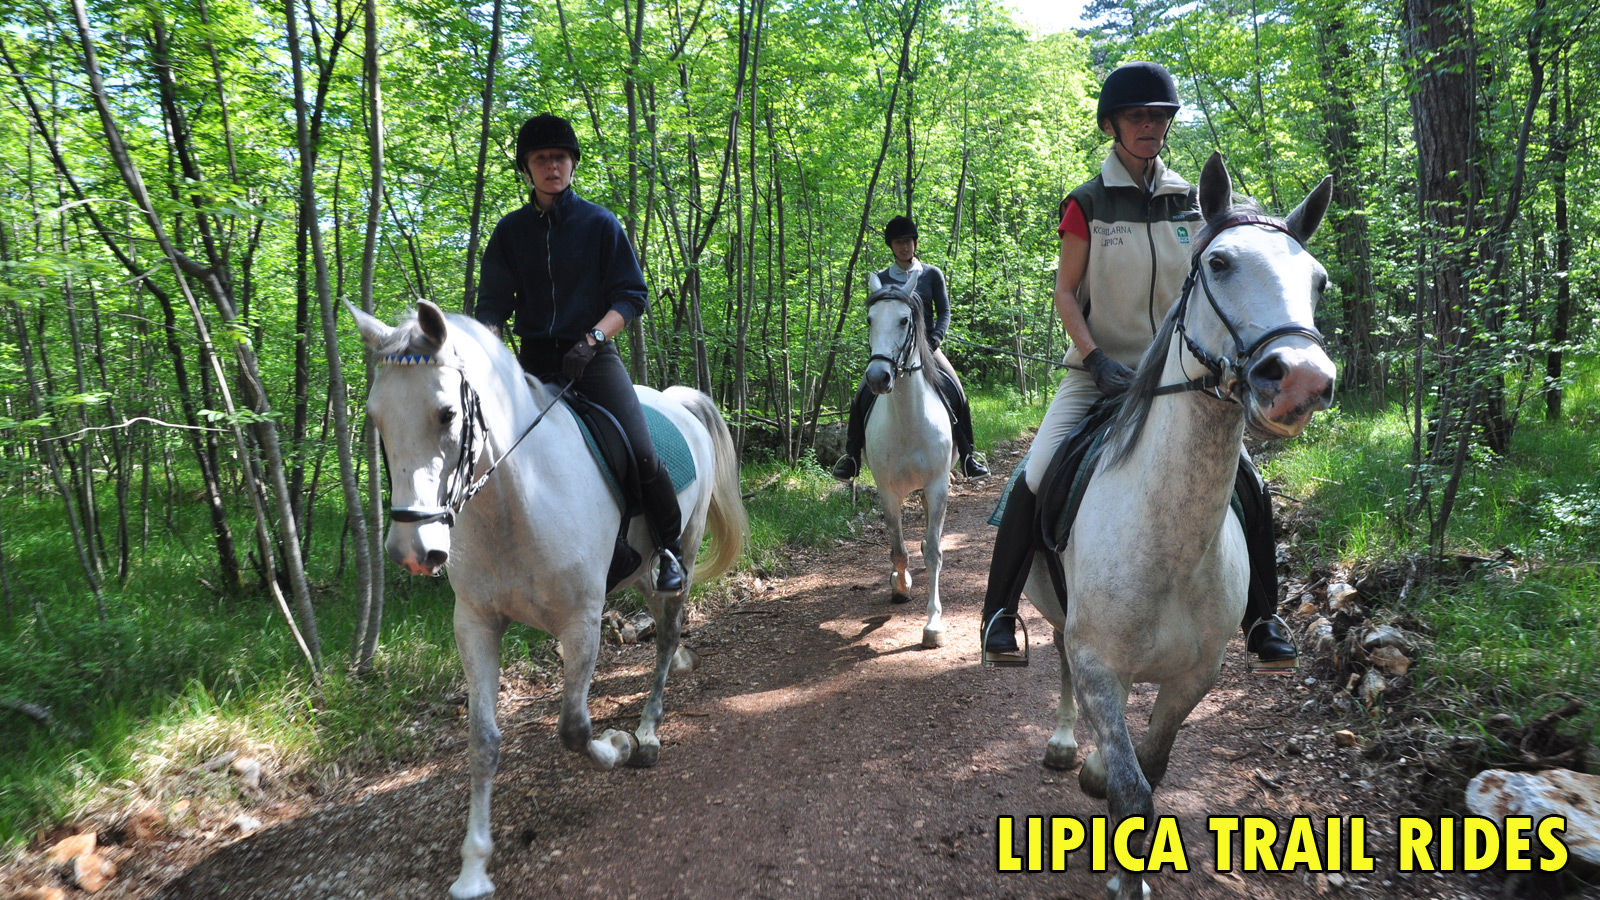 Trail rides in Lipica Lipica, Sloveniaforyou